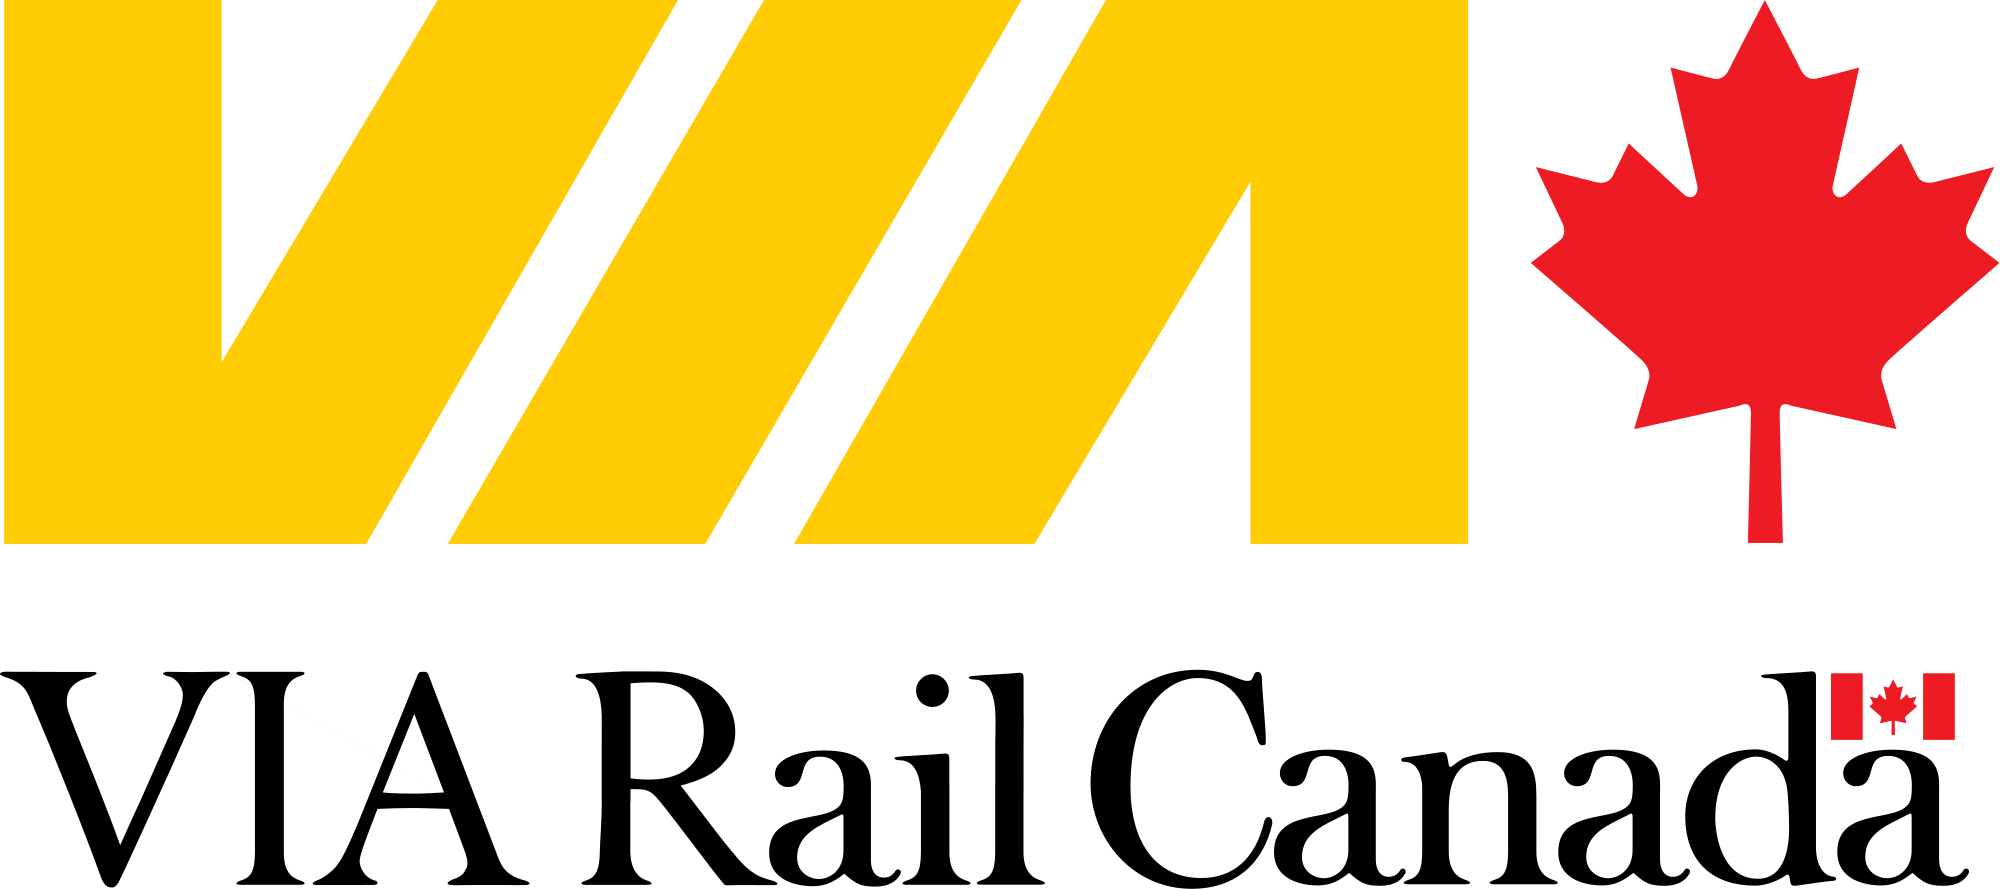 Via Logo - VIA Rail Canada Logo.svg